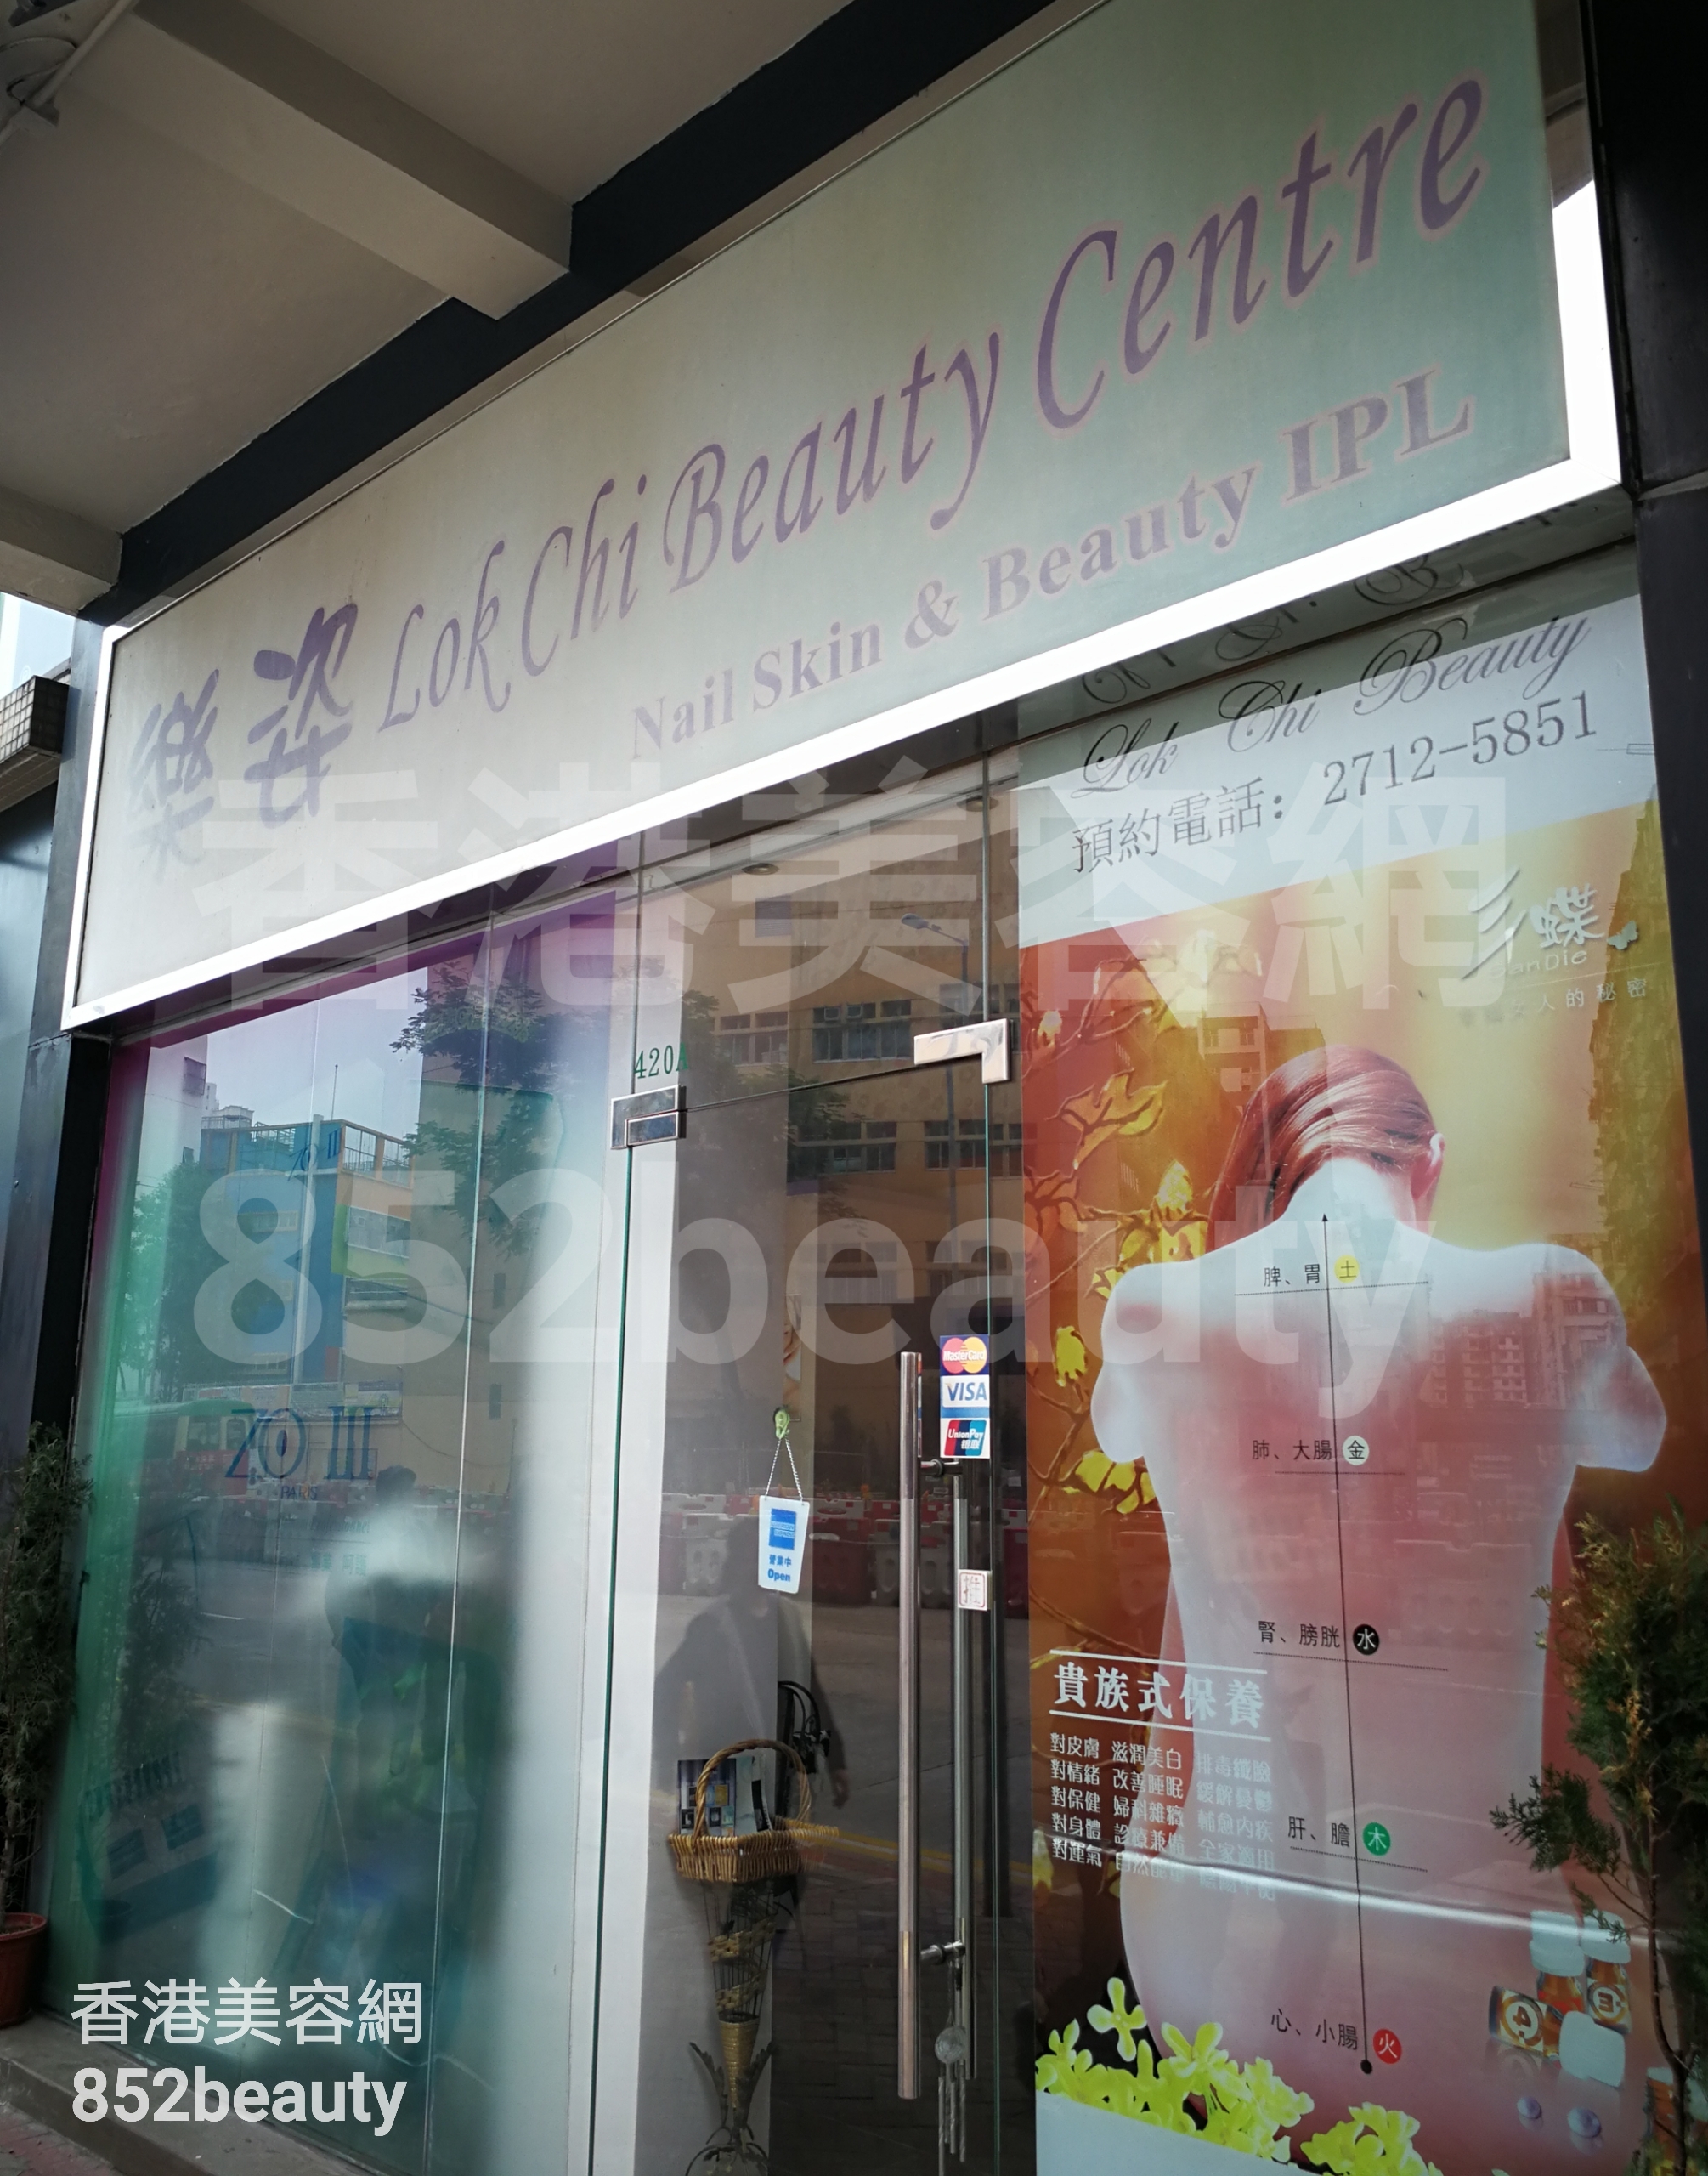 Facial Care: 樂姿 Lok Chi Beauty Centre